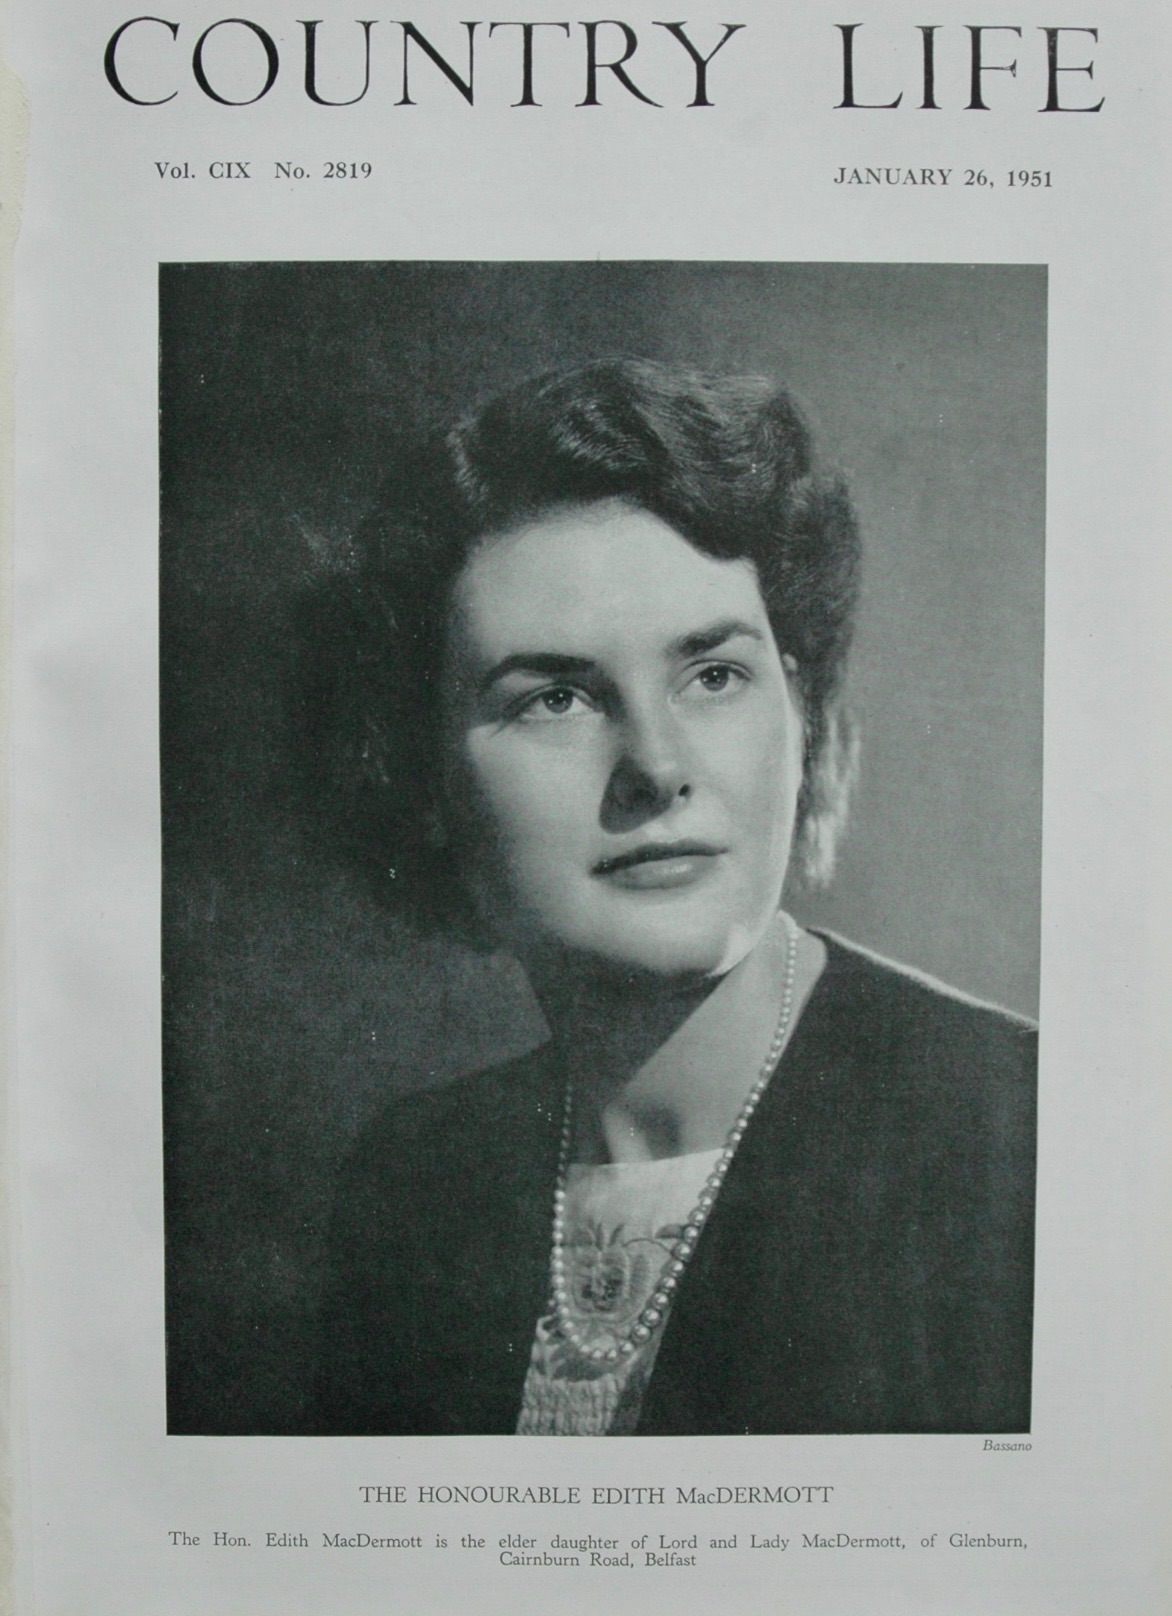 The Honourable Edith MacDermott